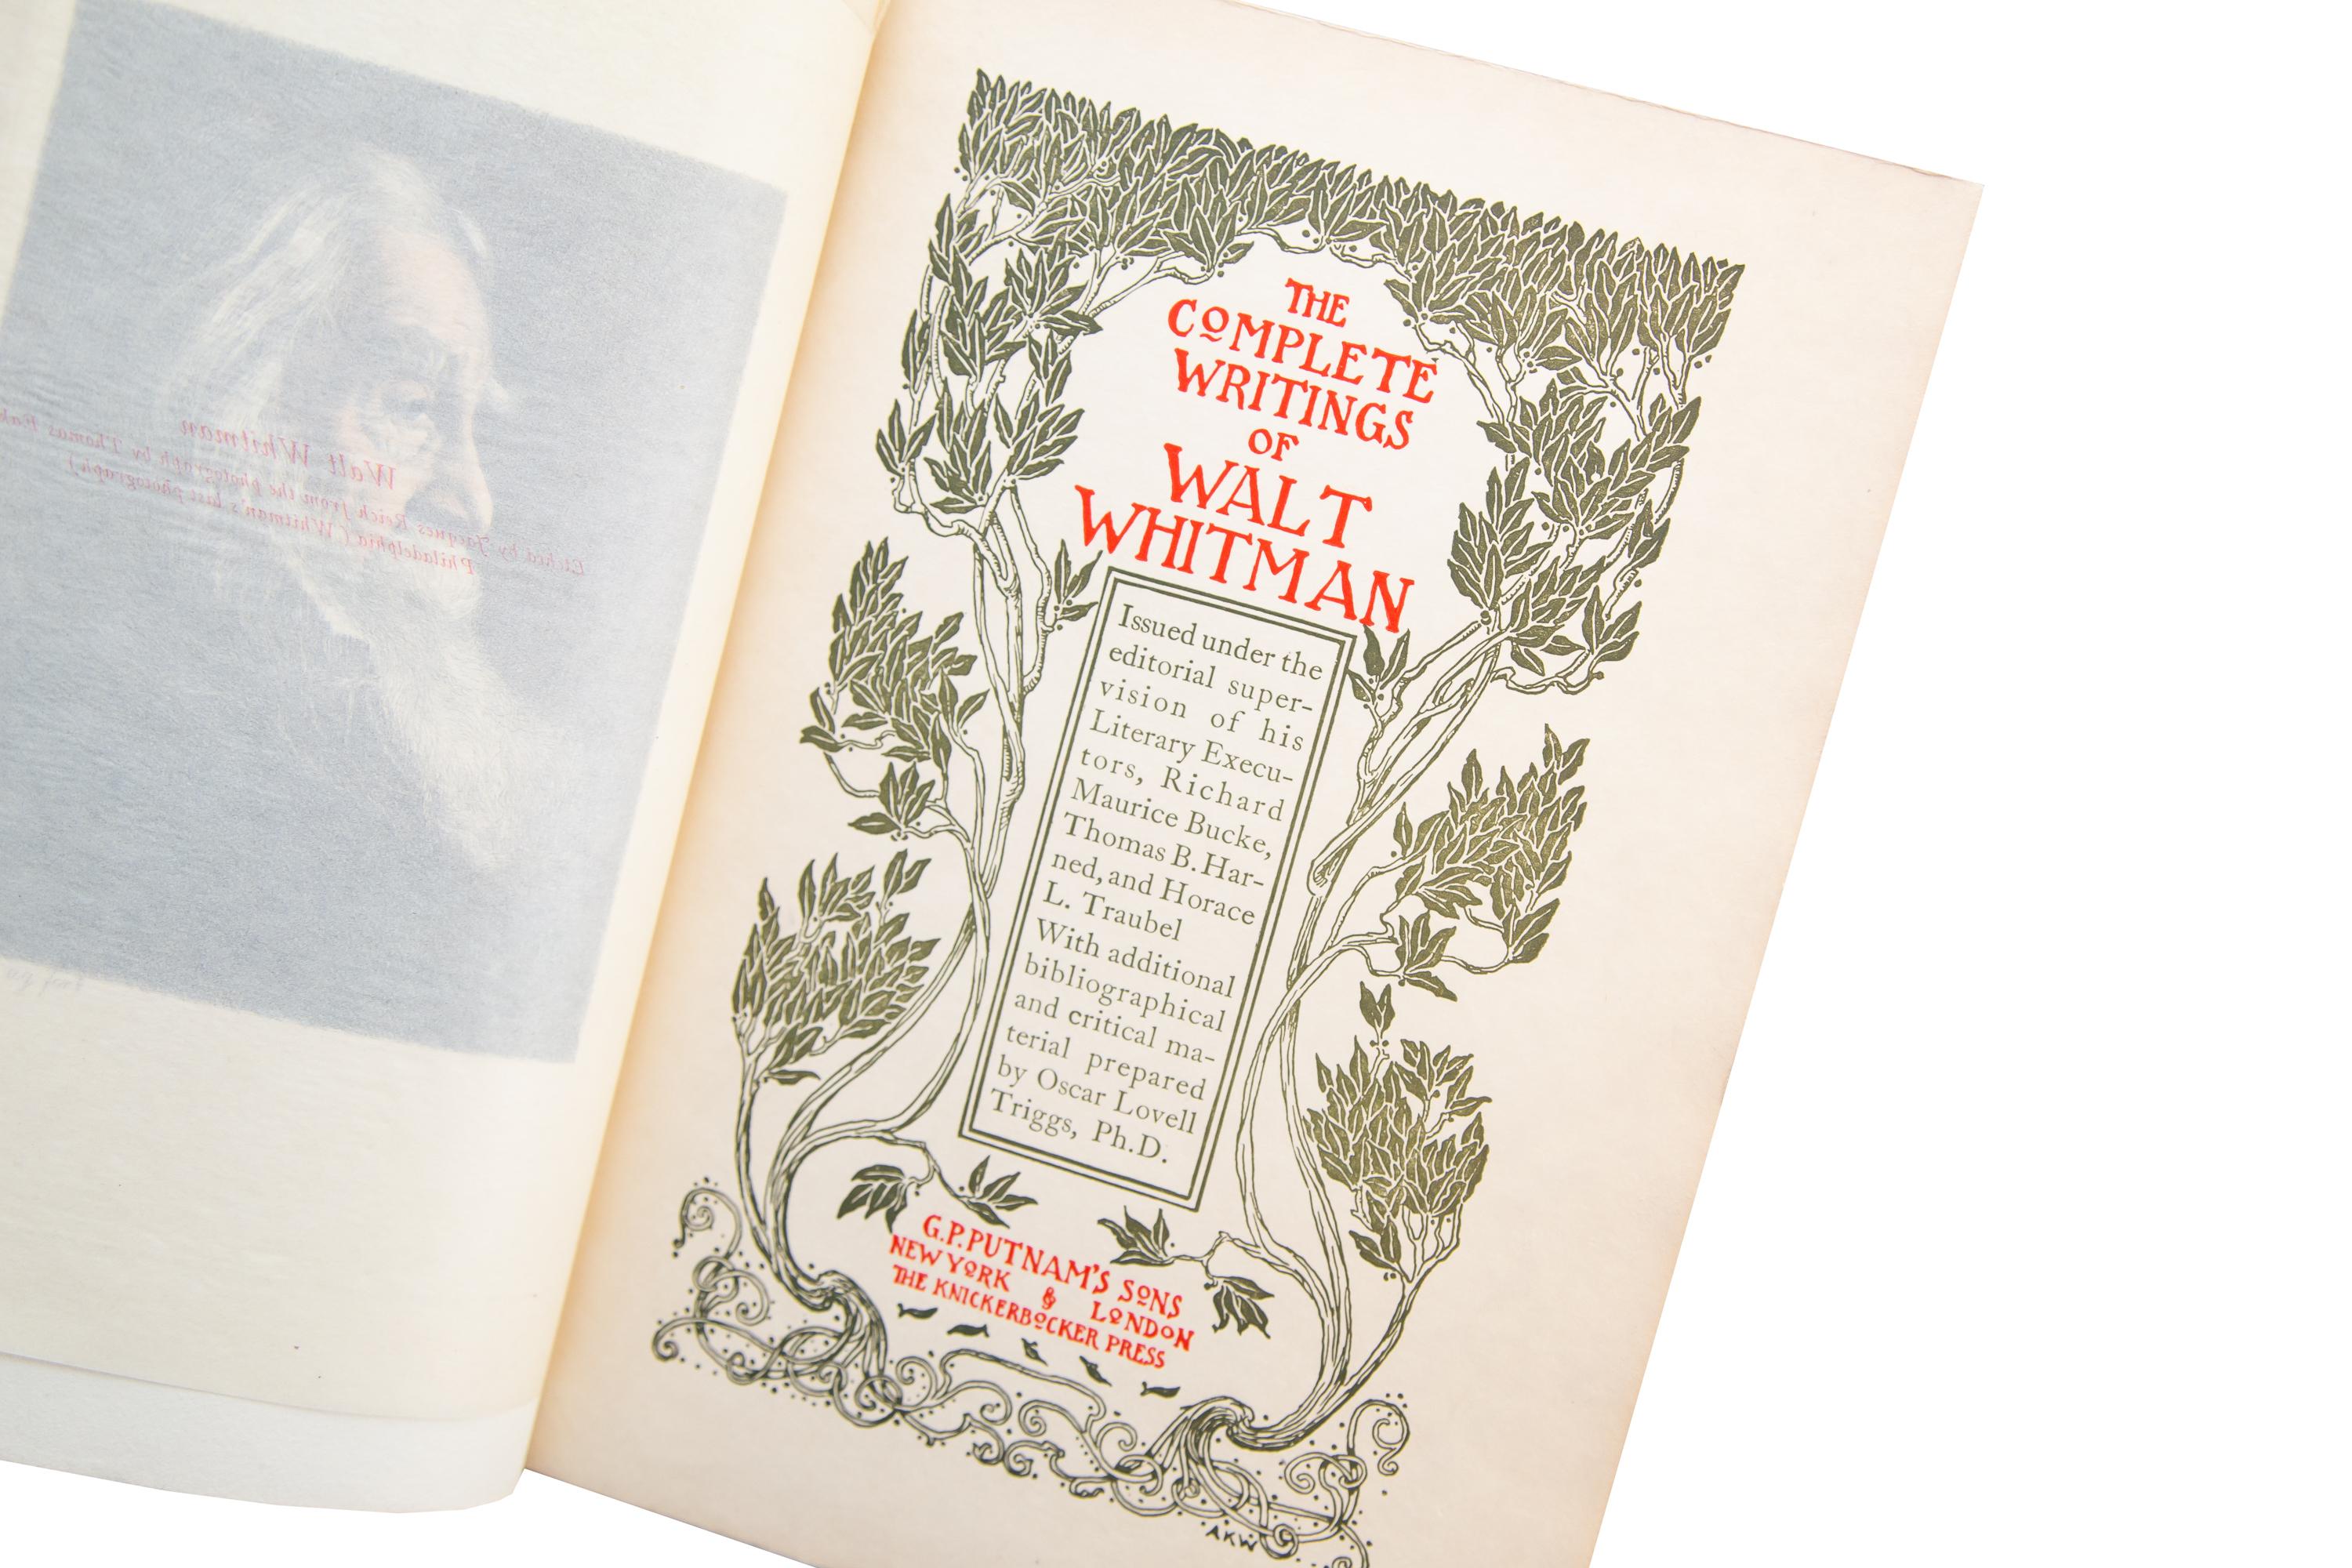 English 10 Volumes, Walt Whitman, the Complete Writings